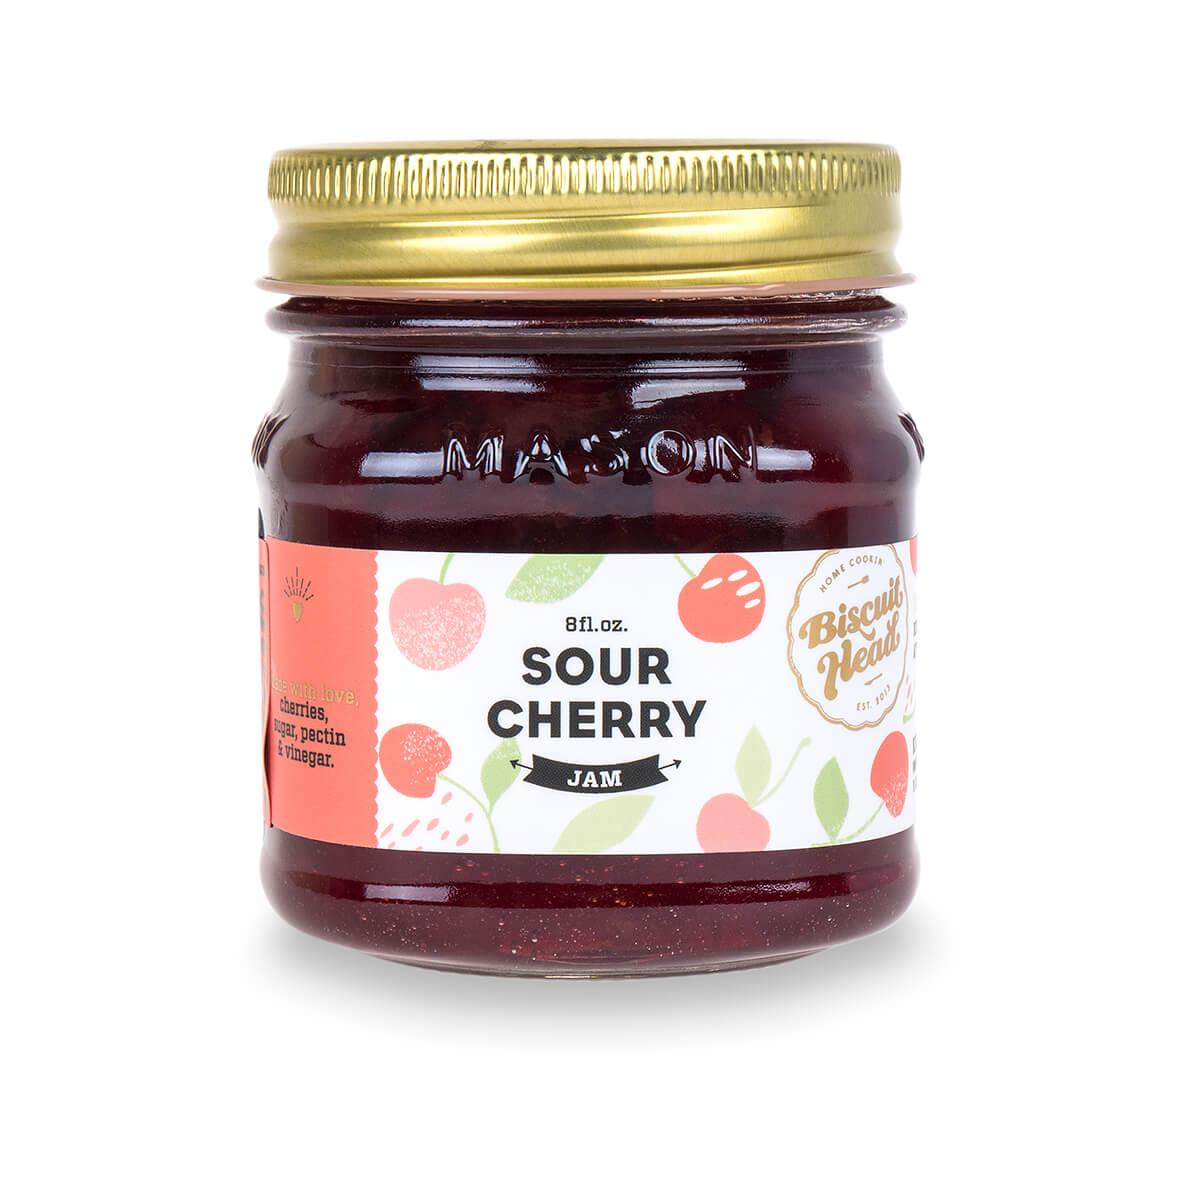  Sour Cherry Jam